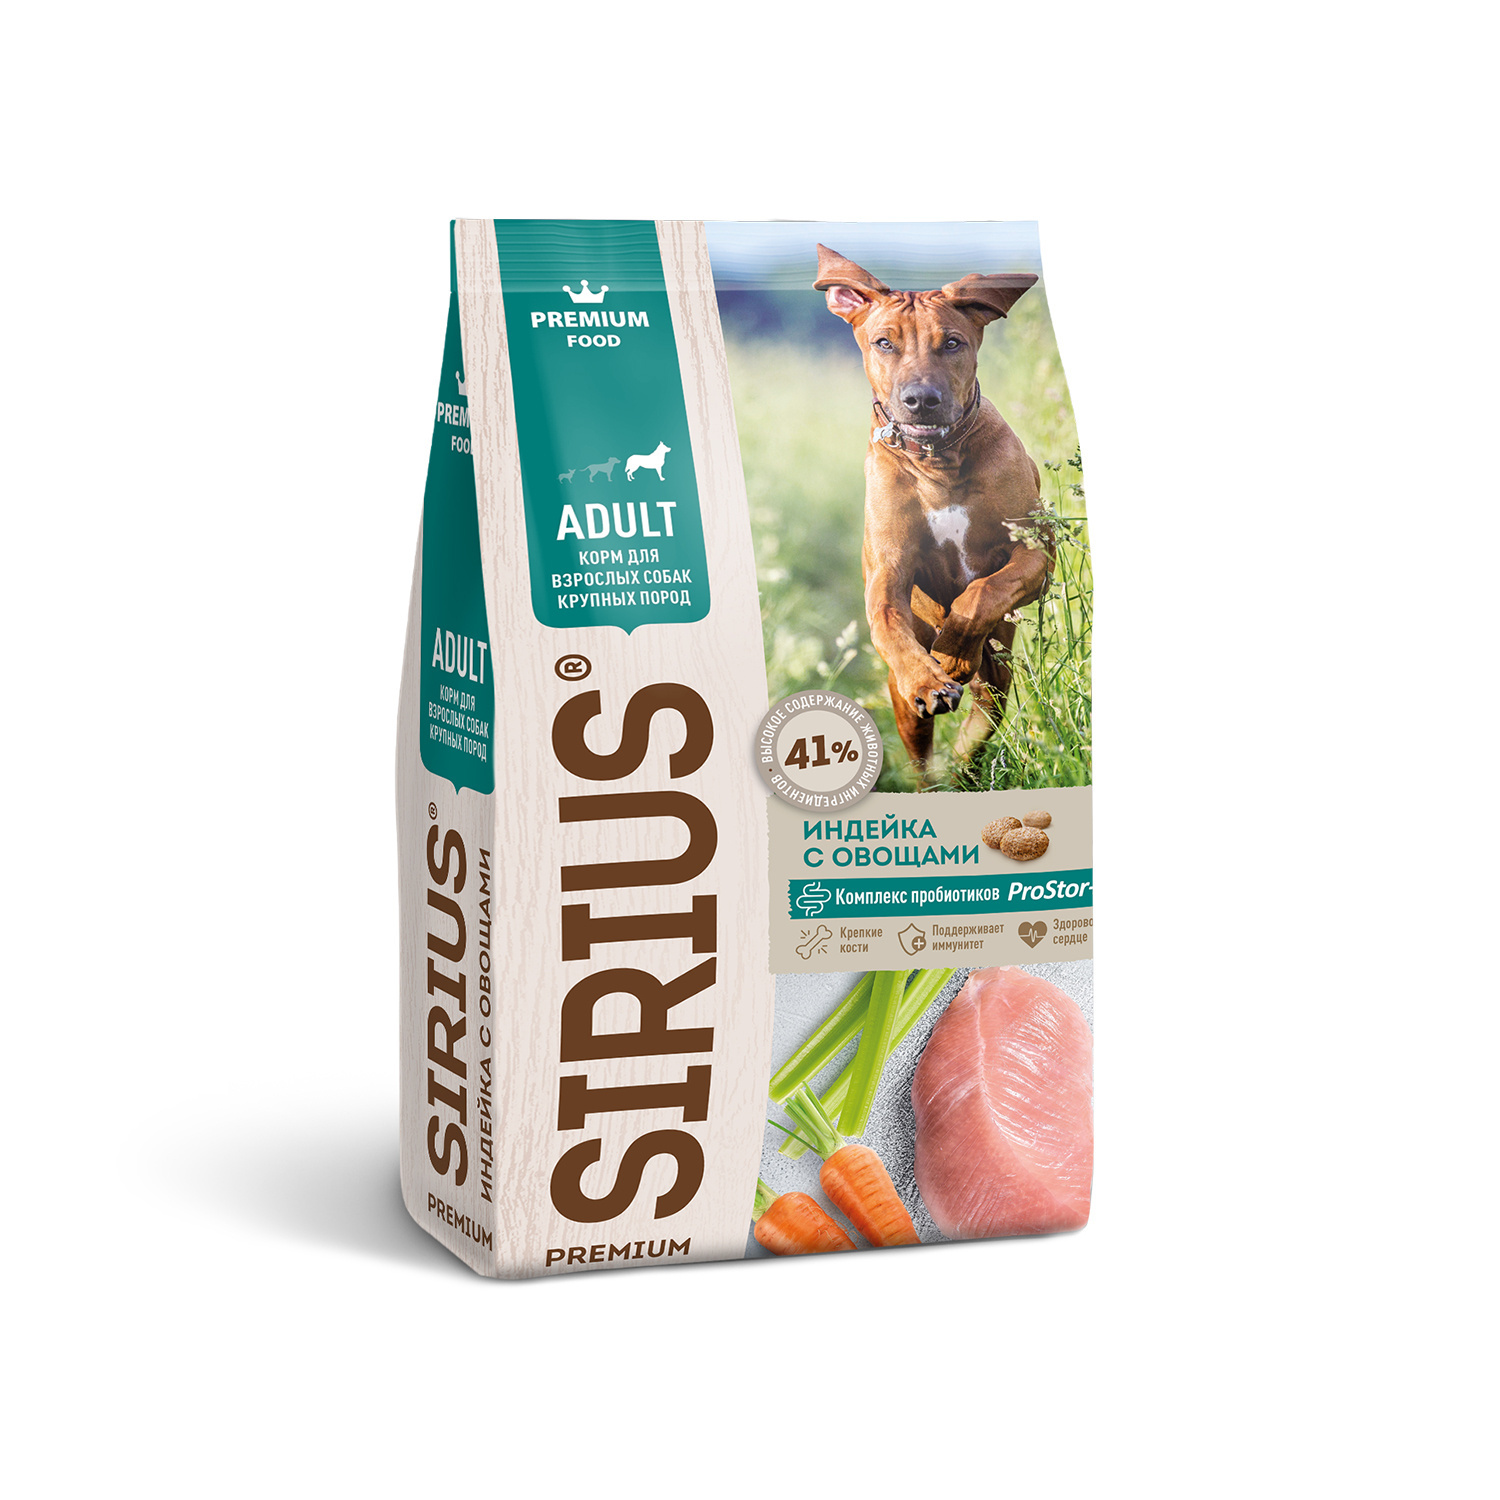 Sirius Sirius сухой корм для собак крупных пород, индейка с овощами (2 кг)